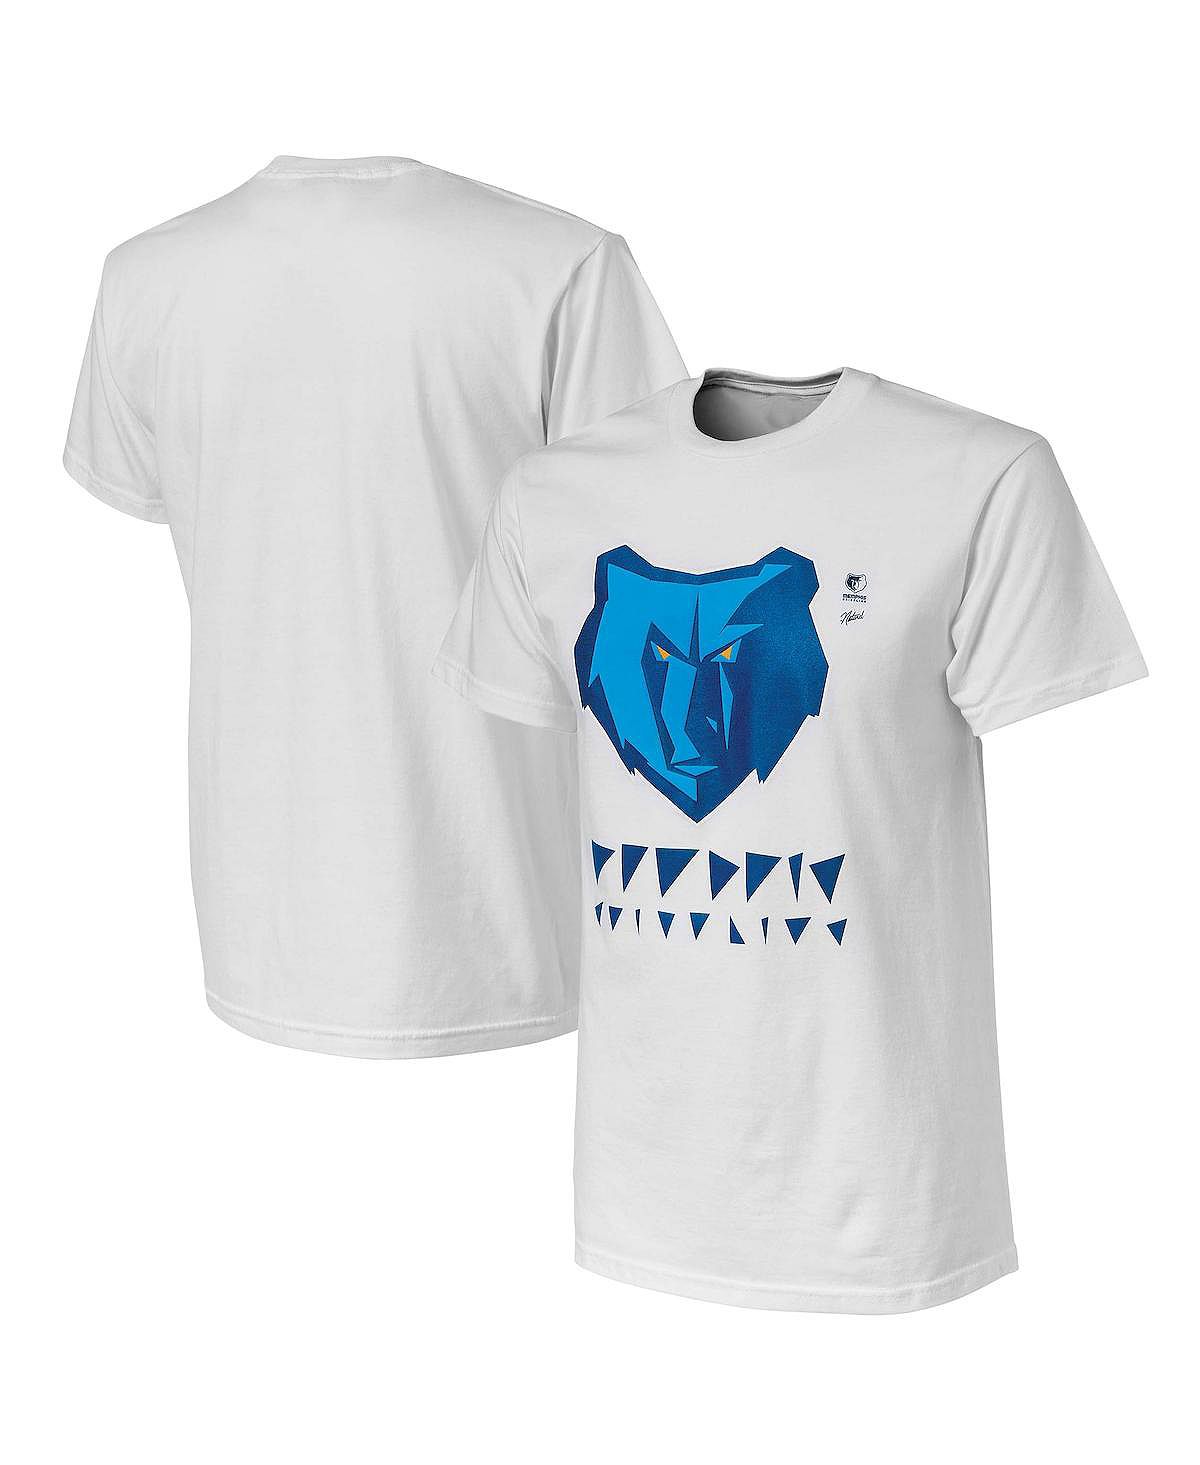 Мужская футболка nba x naturel white memphis grizzlies no caller id NBA Exclusive Collection, белый